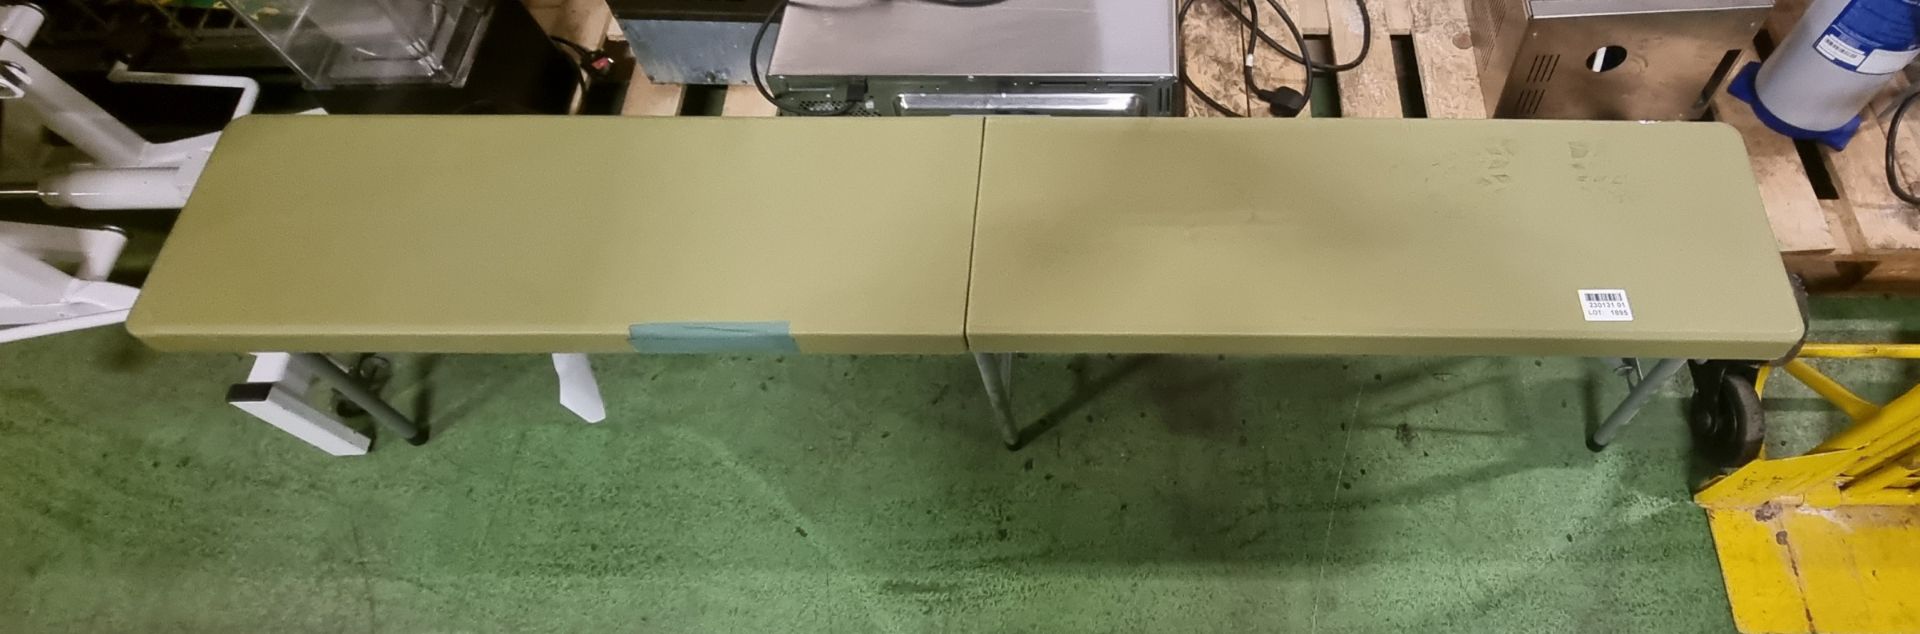 Ex- Army folding bench (opened:180x30x40cm, folded: 90x30x10cm) - Image 2 of 2